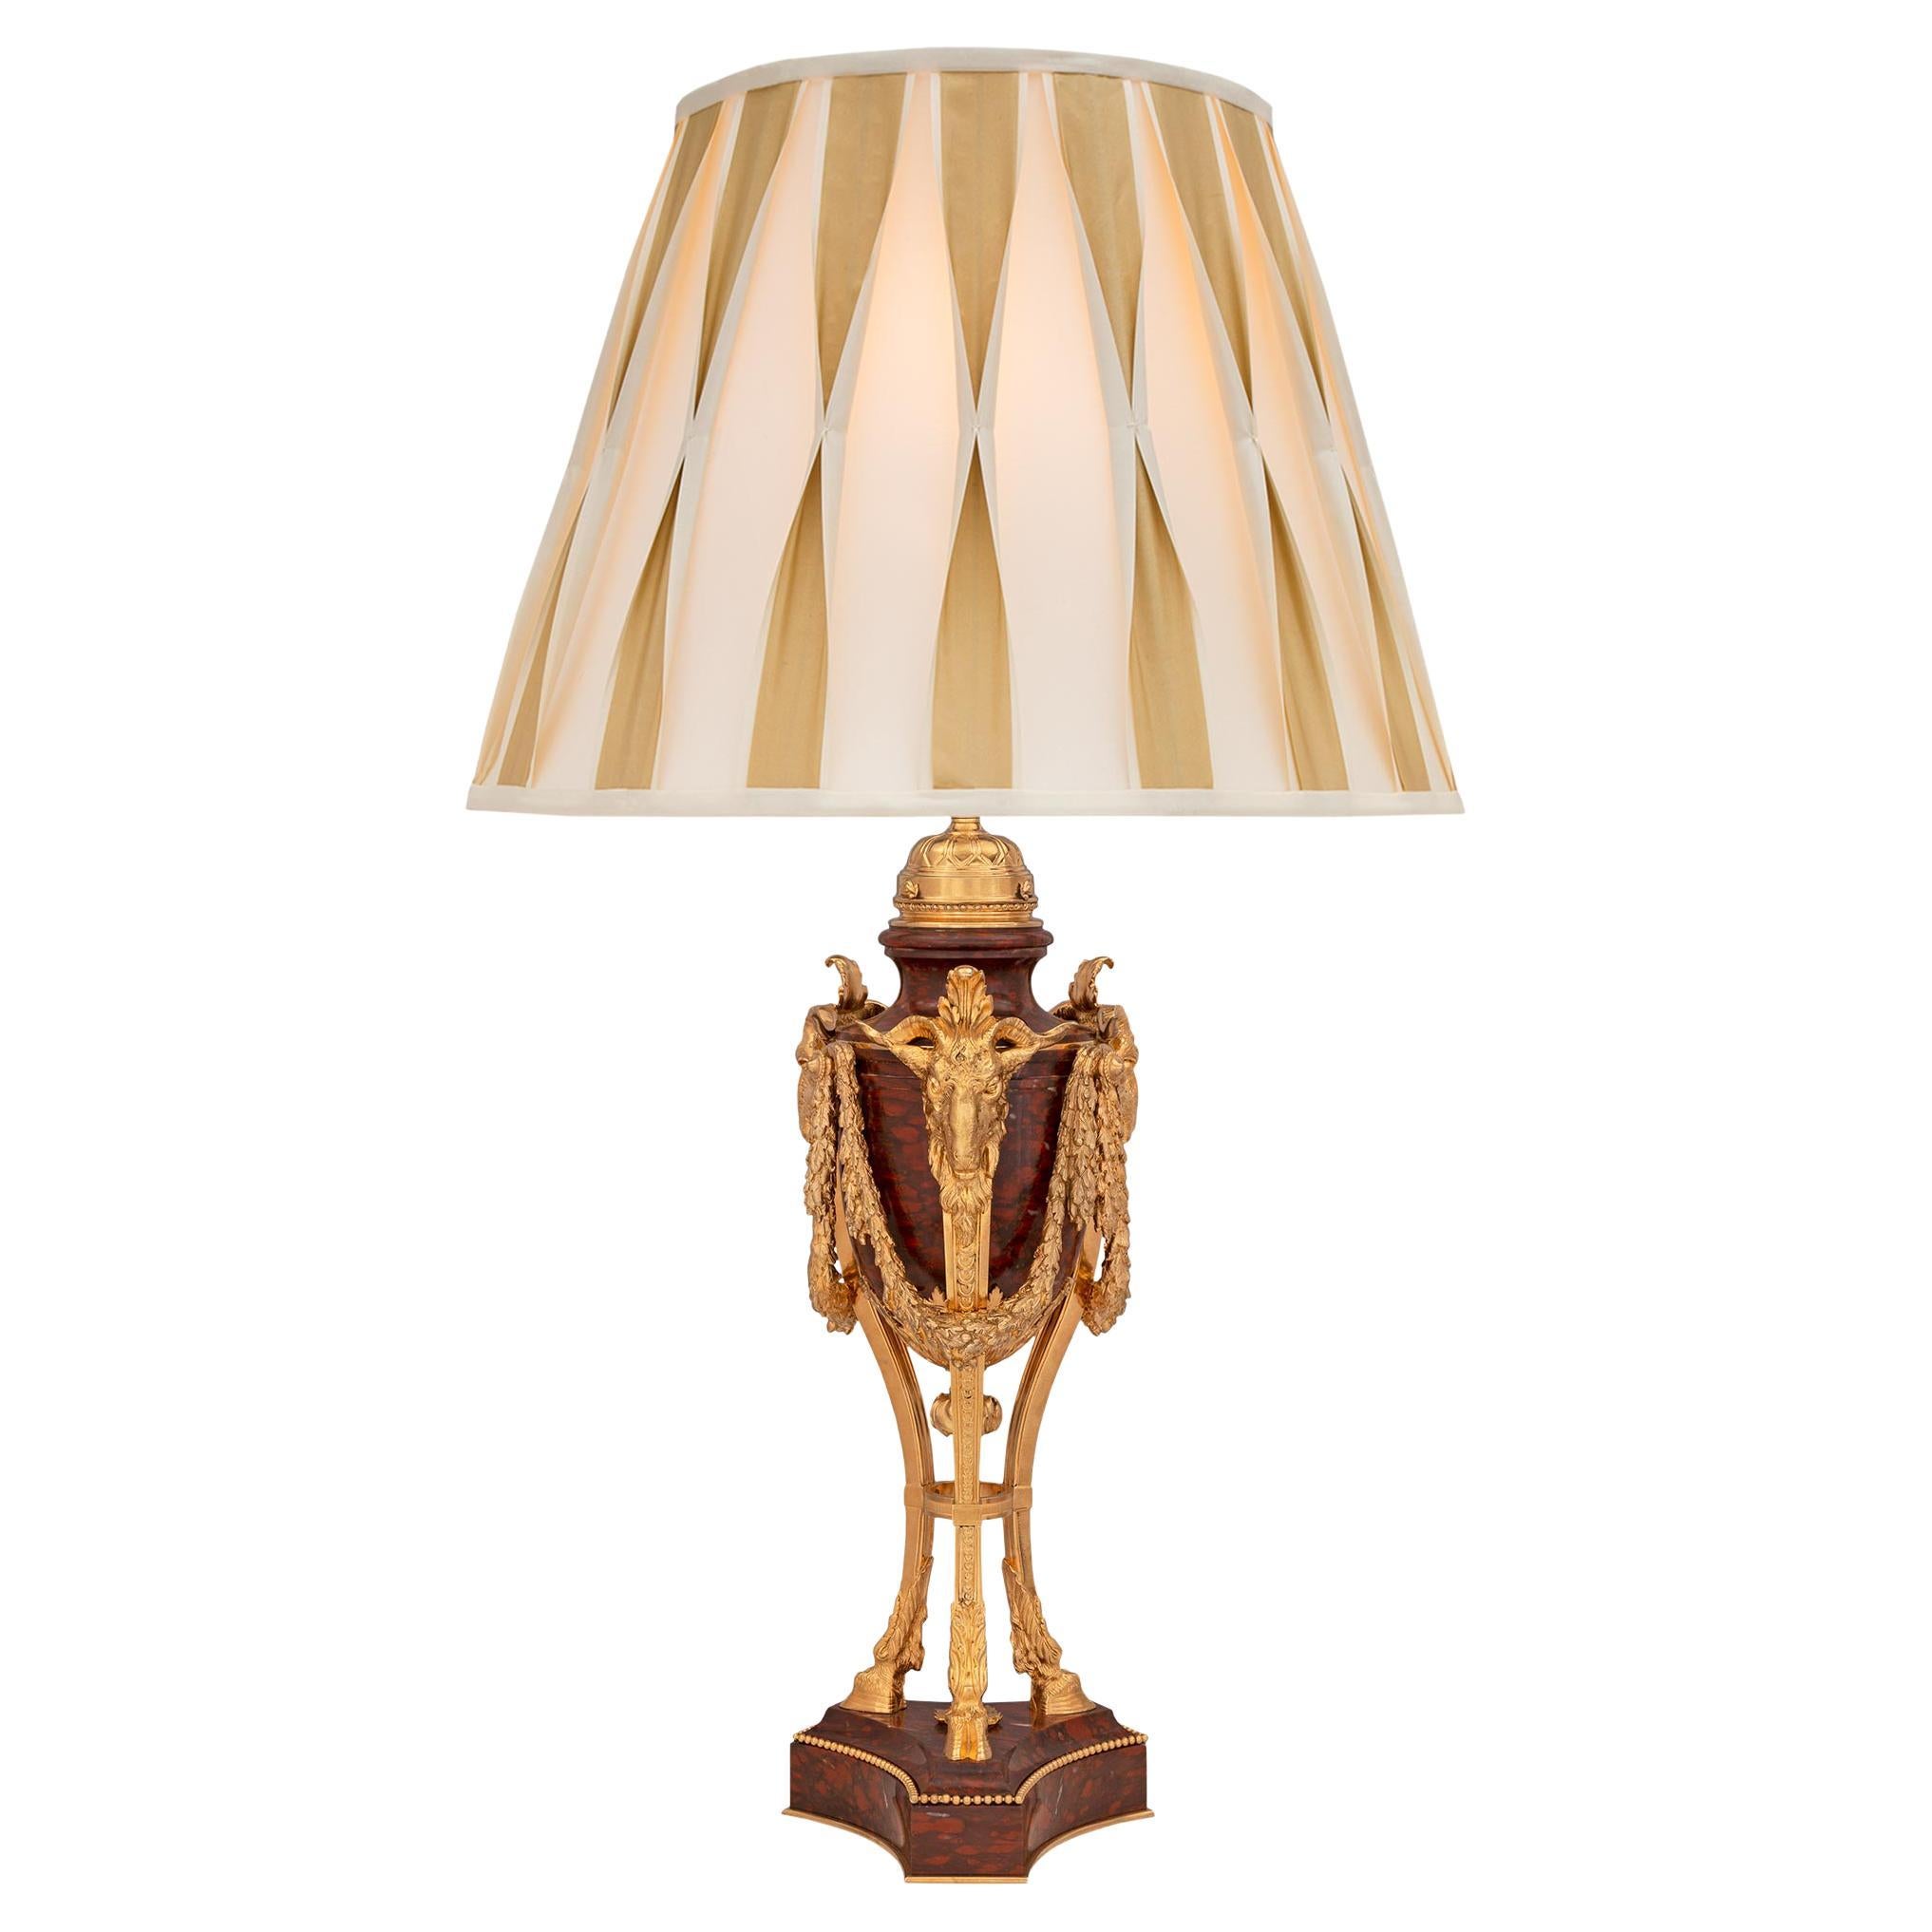 French 19th Century Louis XVI St. Belle Époque Period Lamp For Sale